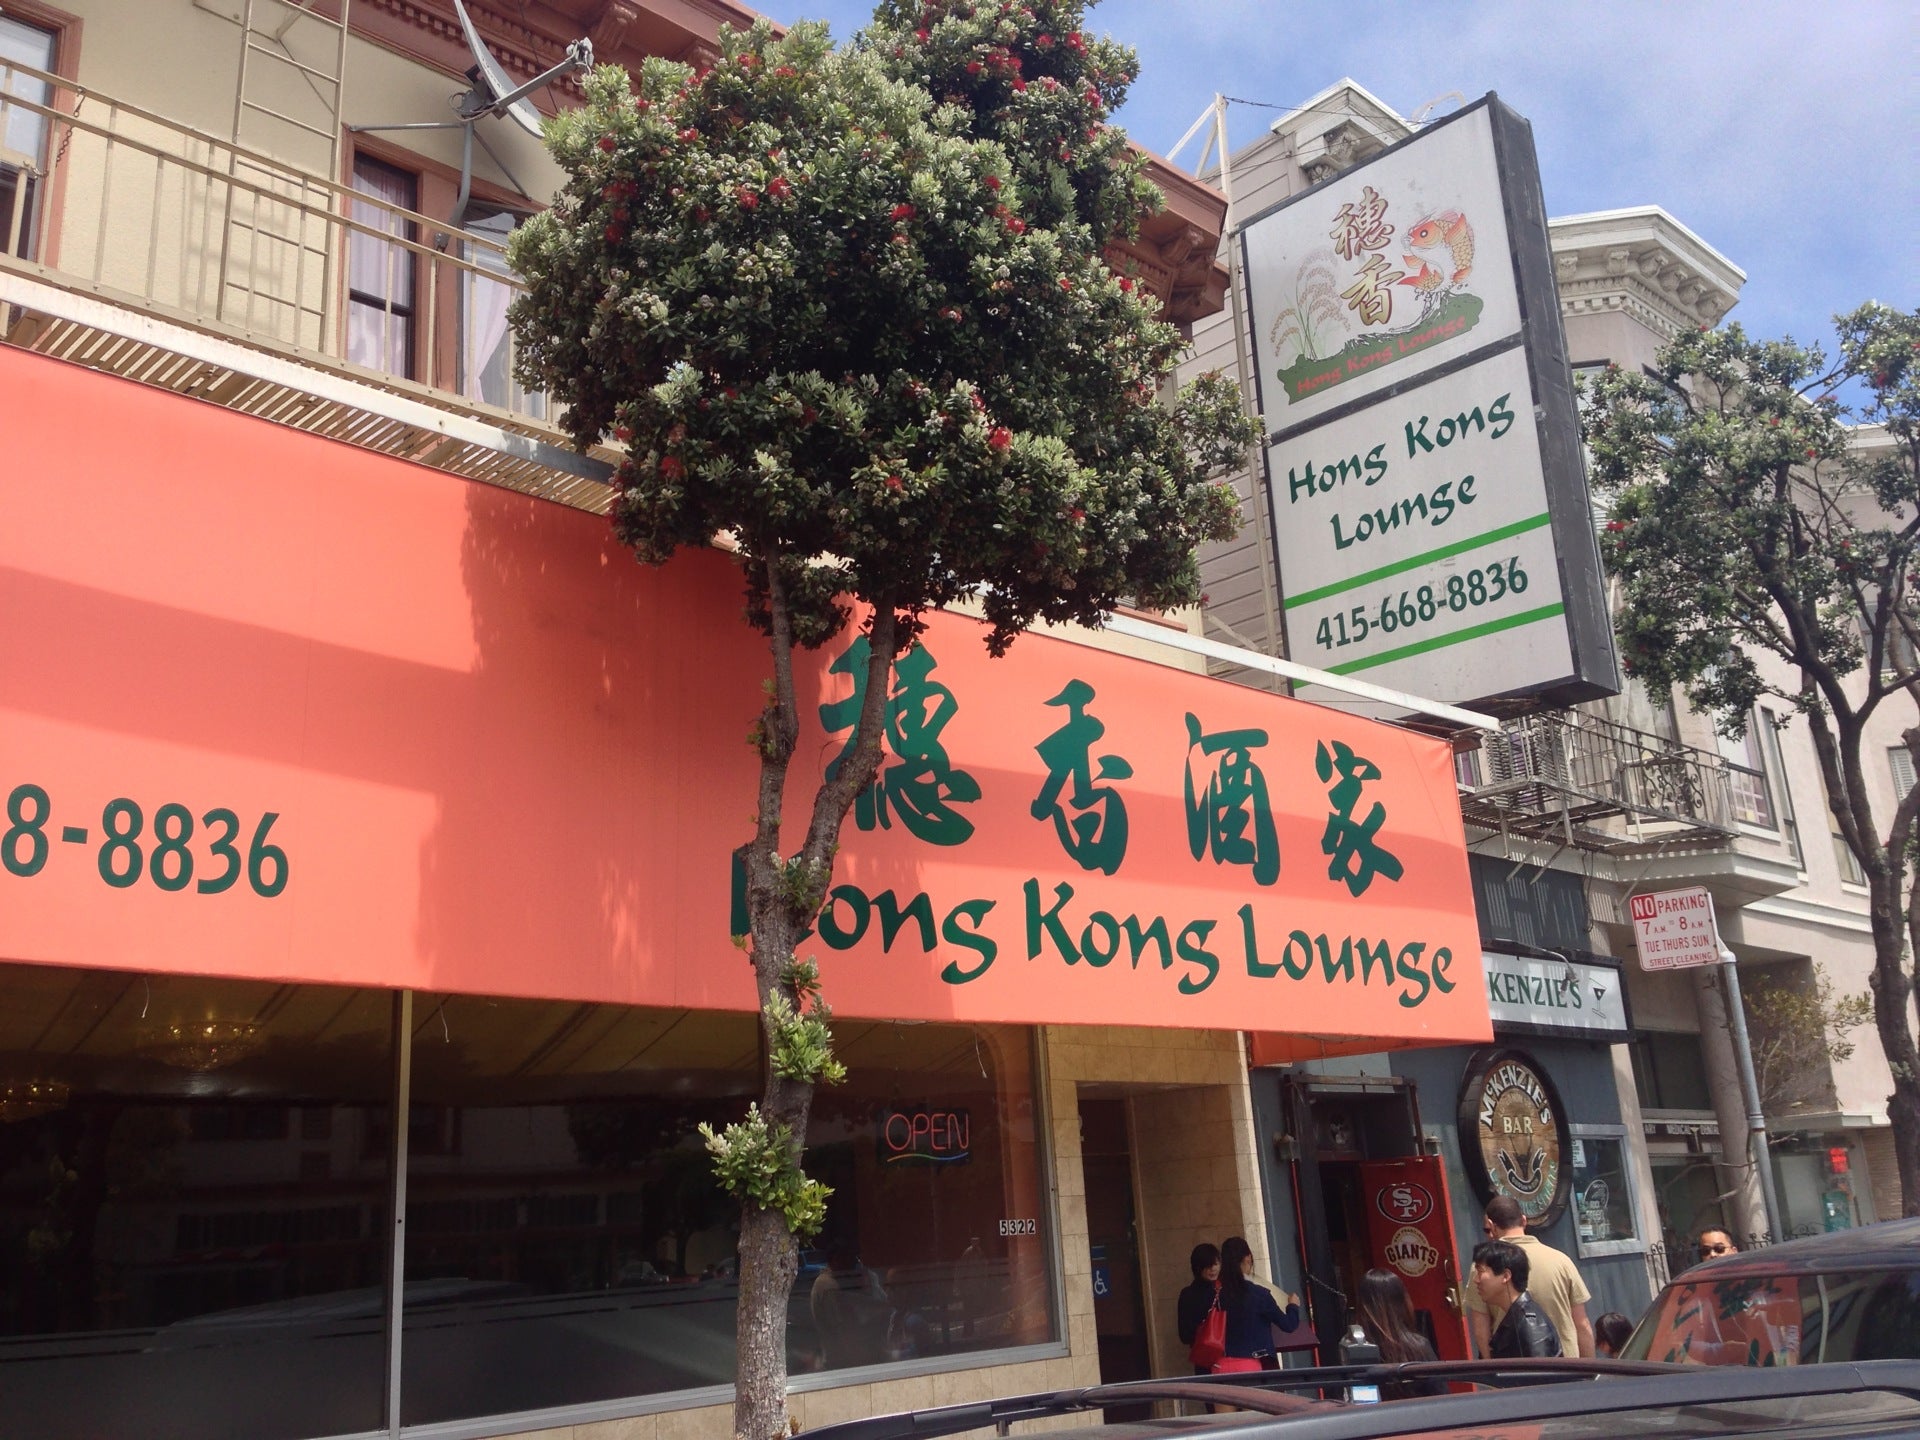 Hong Kong Lounge